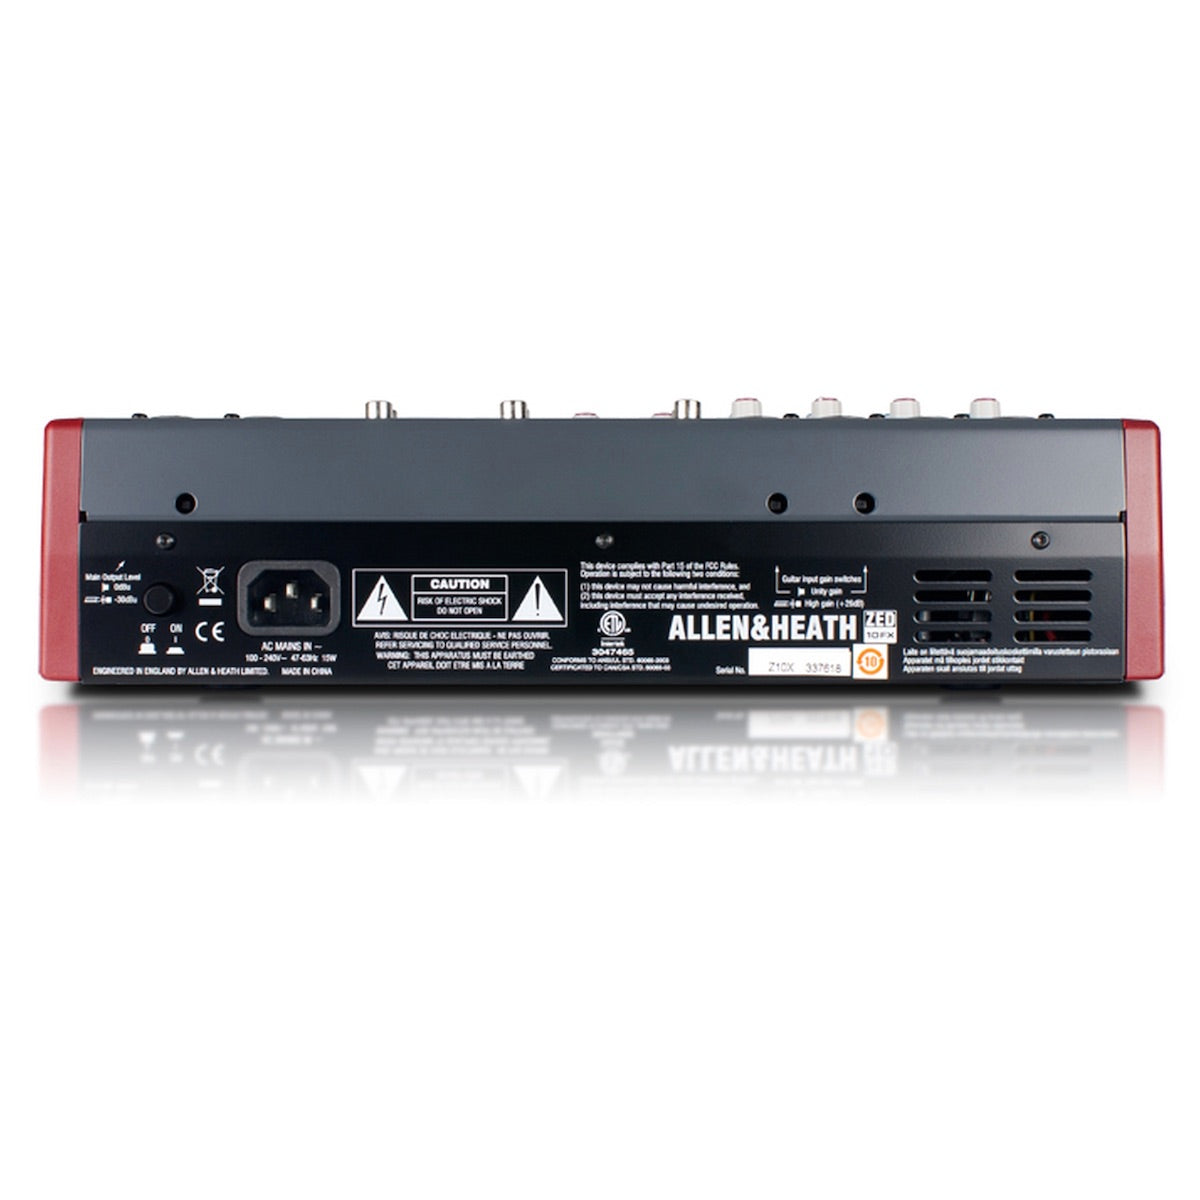 Allen & Heath ZED-10FX 10-Channel Analog USB Mixer with Effects